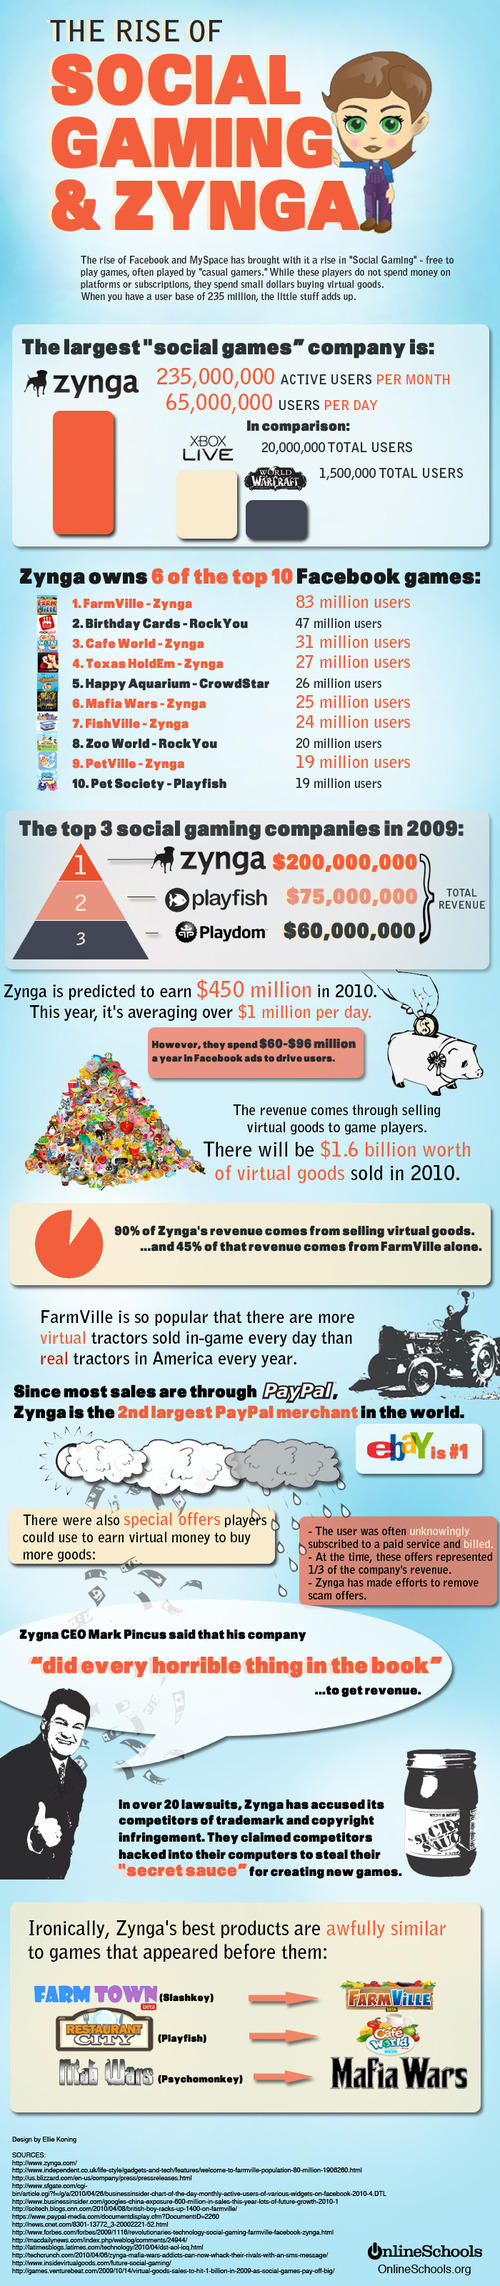 The Rise of Social Gaming & Zynga